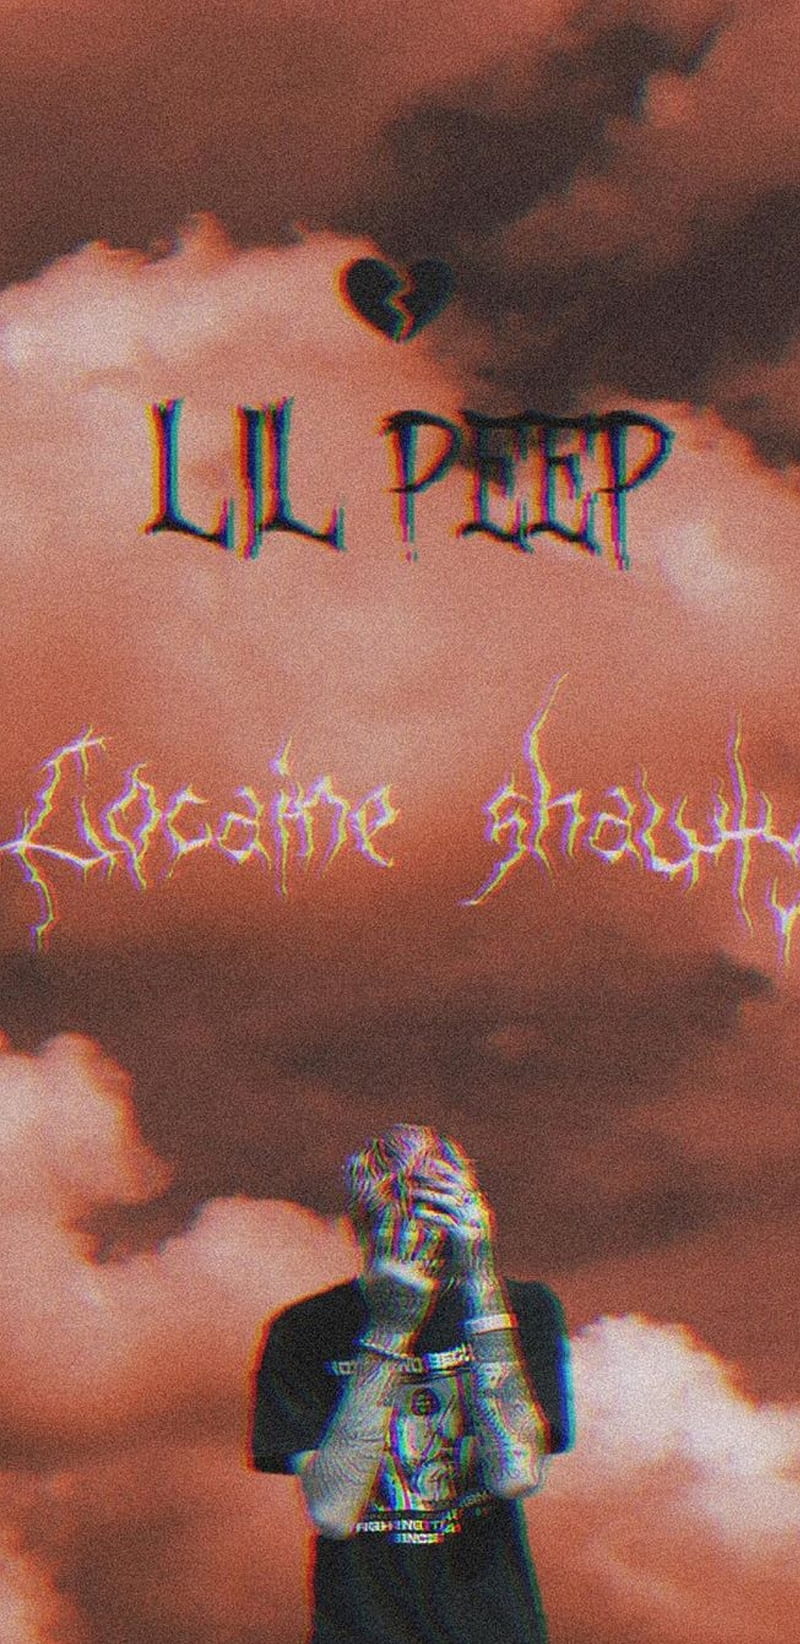 Lil peep shawty, aesthetic, aussie, dark, depressed, lilpeep, rap, red, sad, HD phone wallpaper